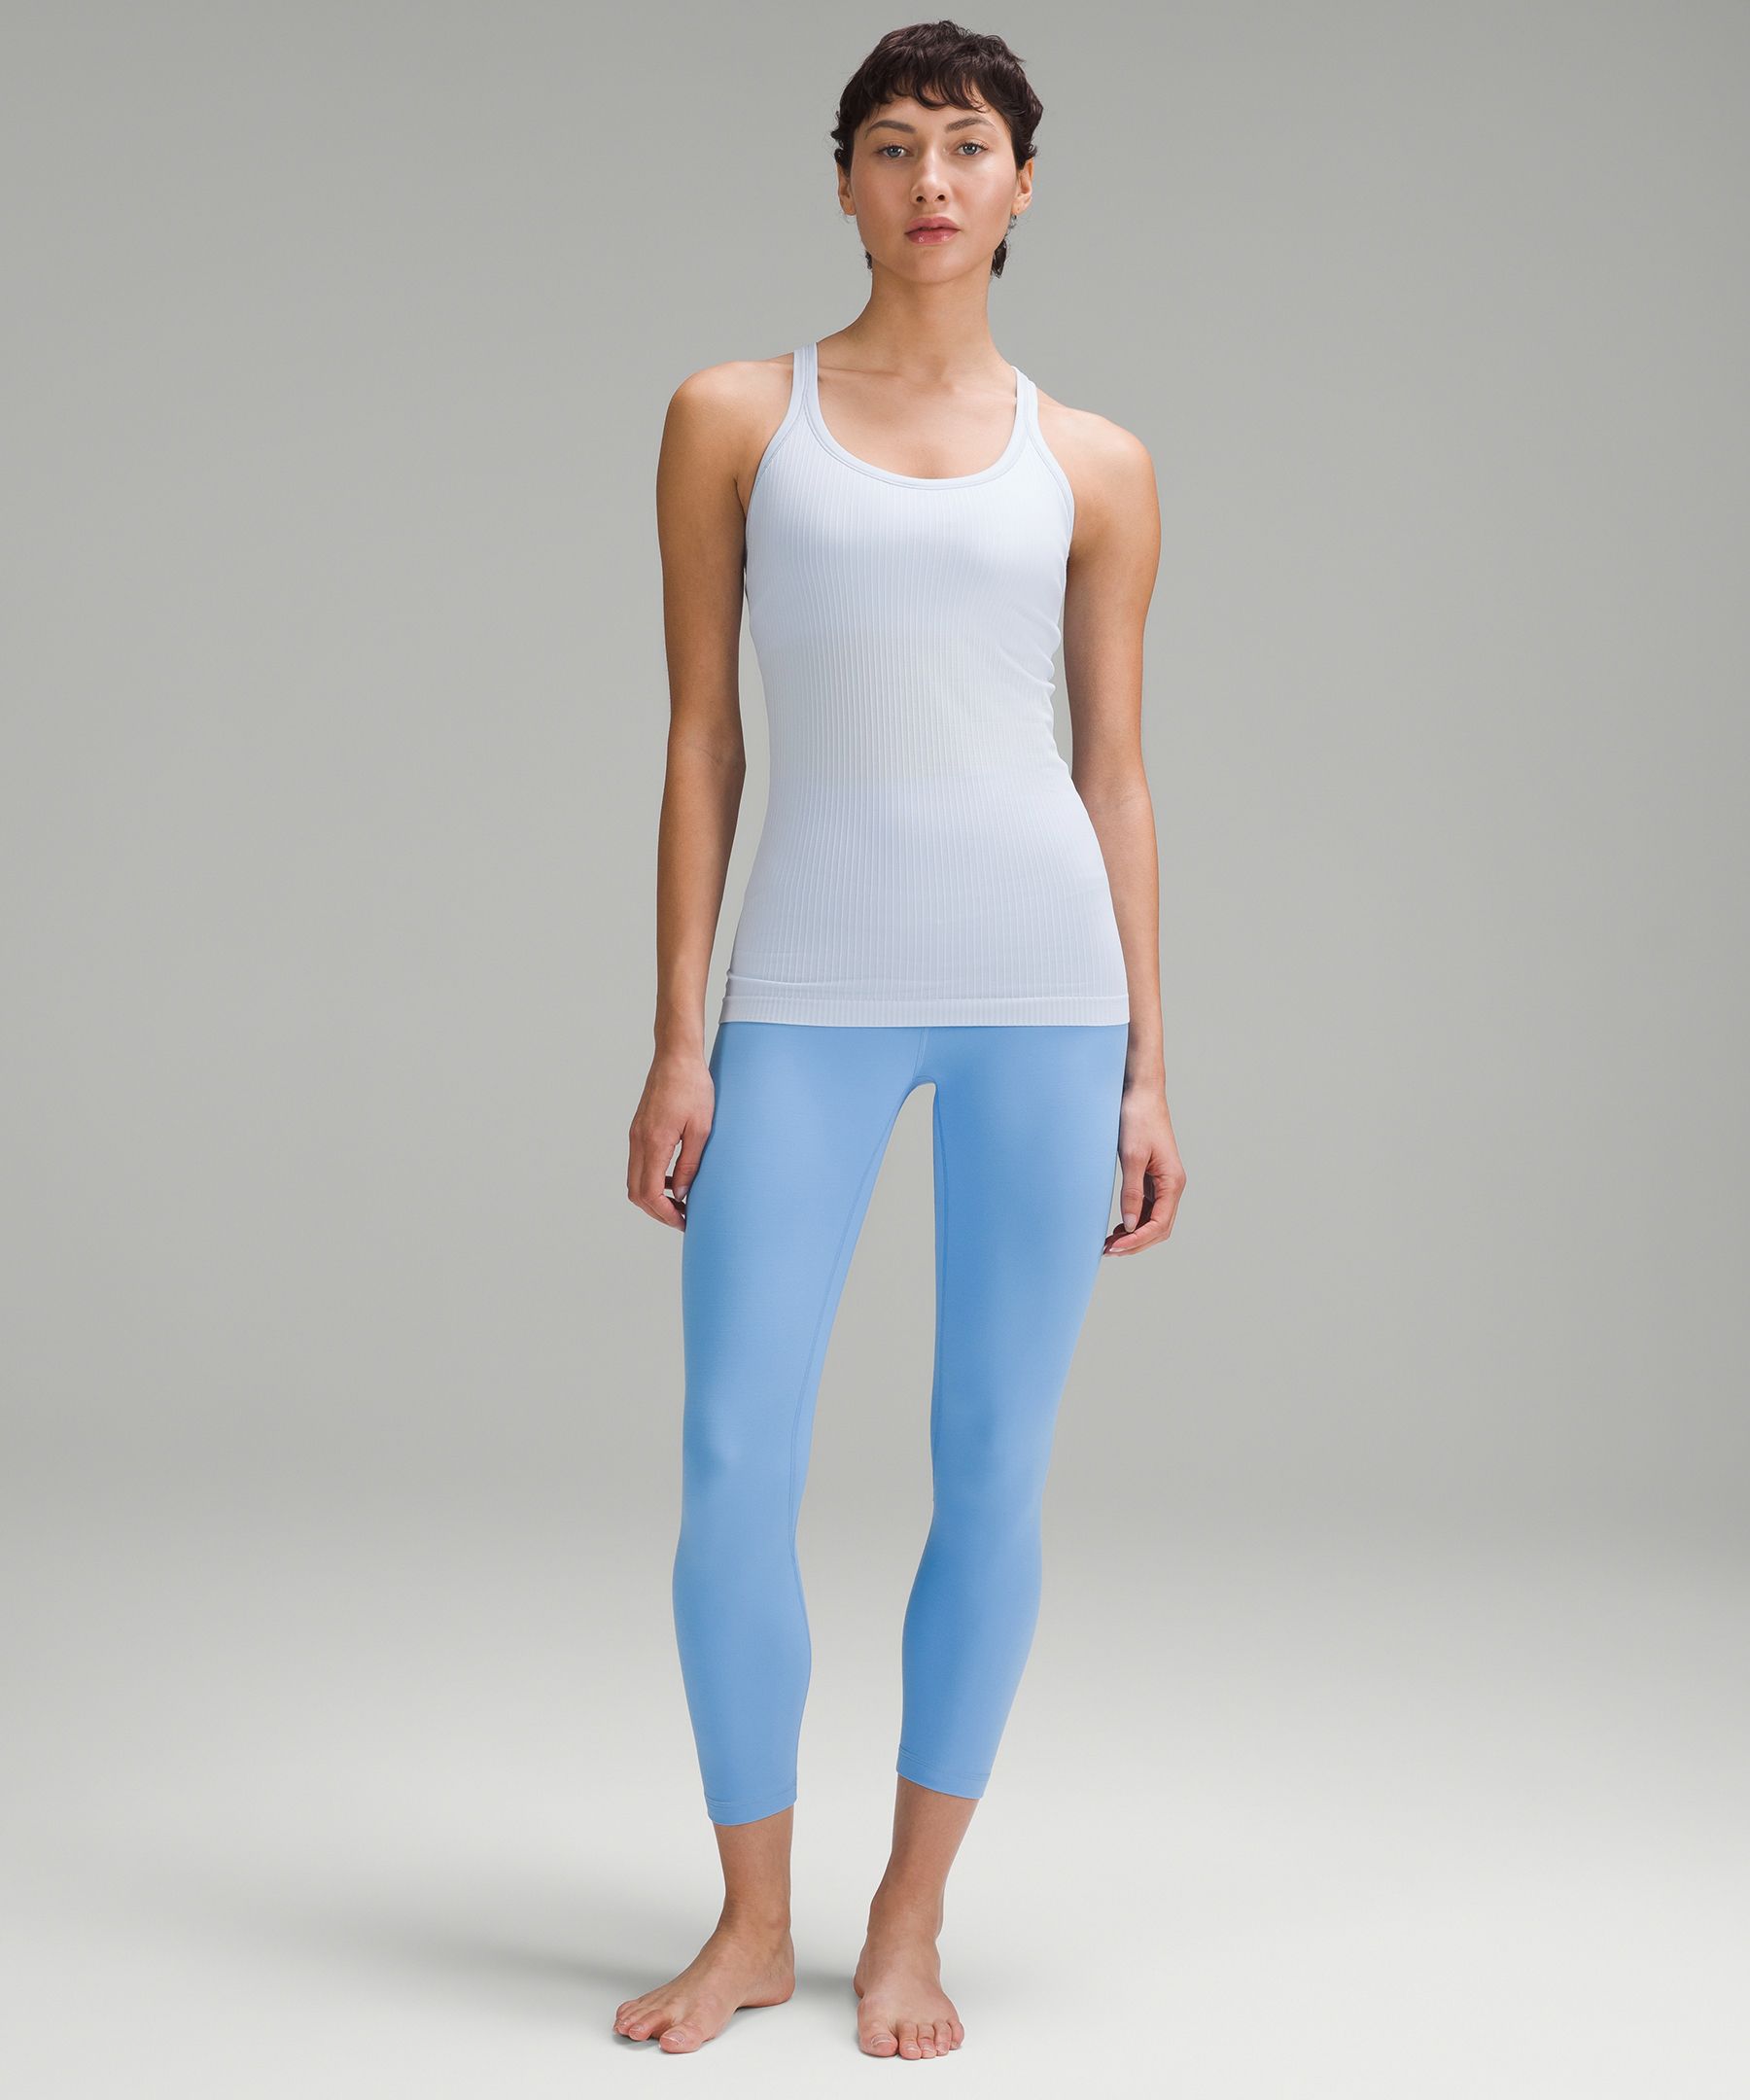 Lululemon Withdraws Sheer Yoga Pants, Stock Drops, At least…